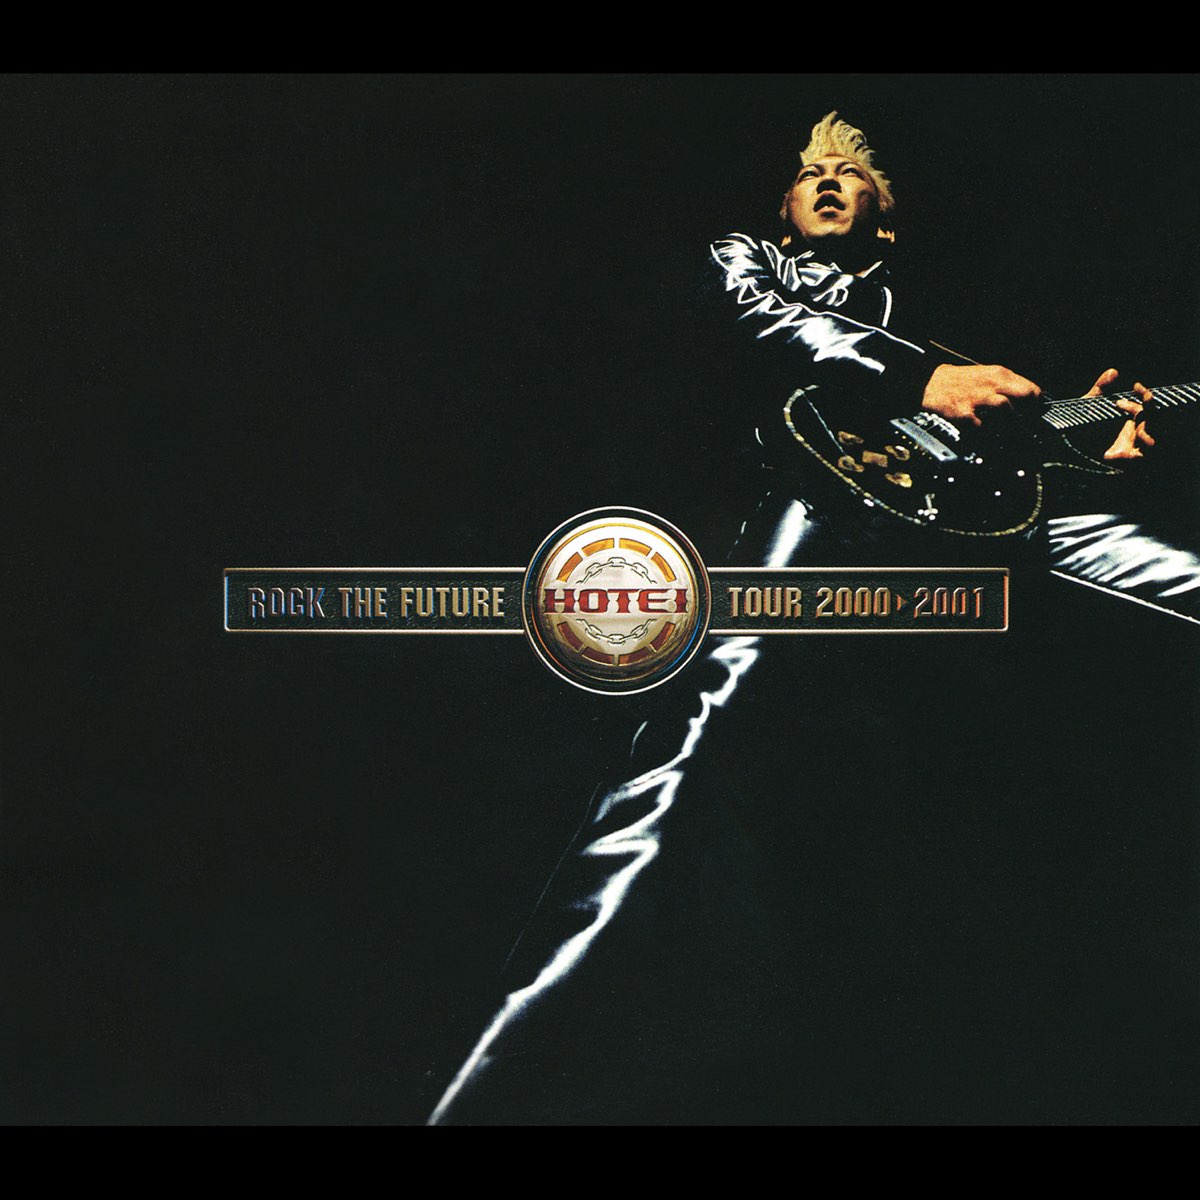 ROCK THE FUTURE TOUR 2000-2001 - 布袋寅泰のアルバム - Apple Music